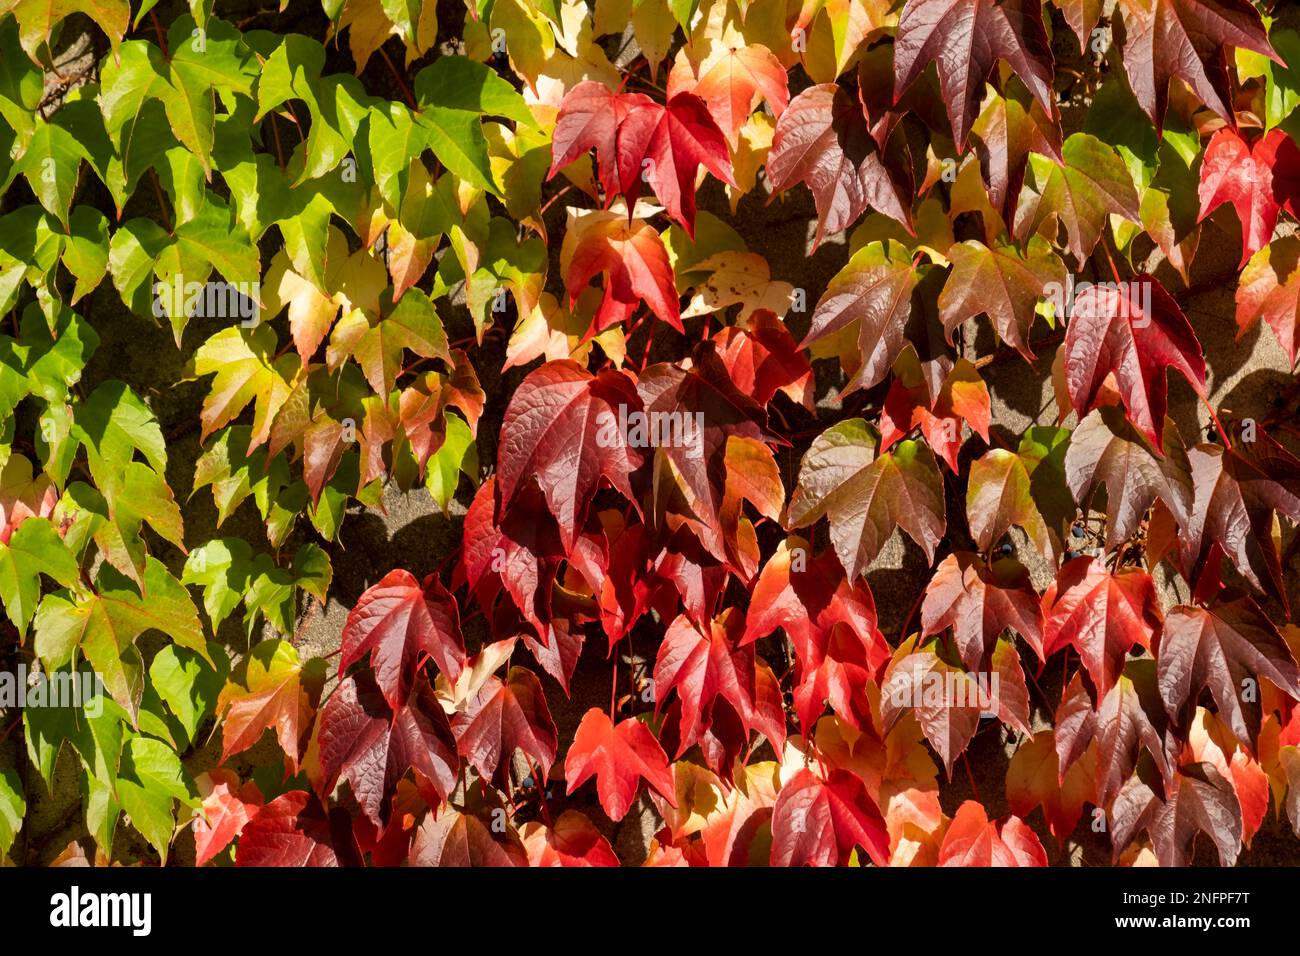 Discolouring leaves of wild vine (Vitis vinifera subsp. sylvestris) Stock Photo